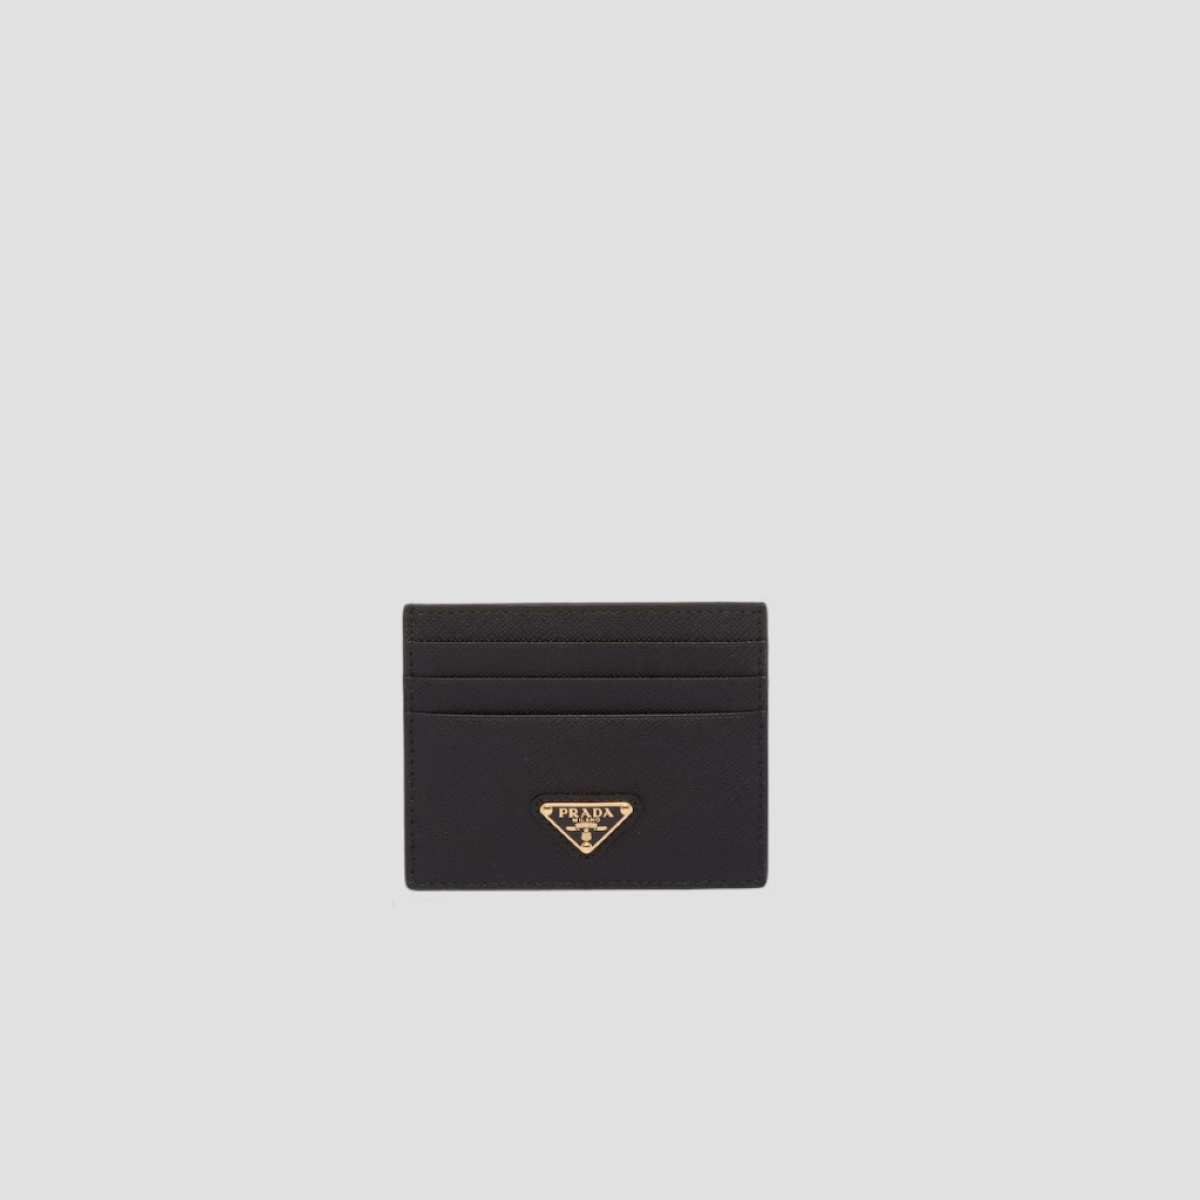 PRADA BLACK SAFFIANO LEATHER CARD HOLDER GOLD METAL TRIANGLE LOGO 1MC025_QHH_F0002